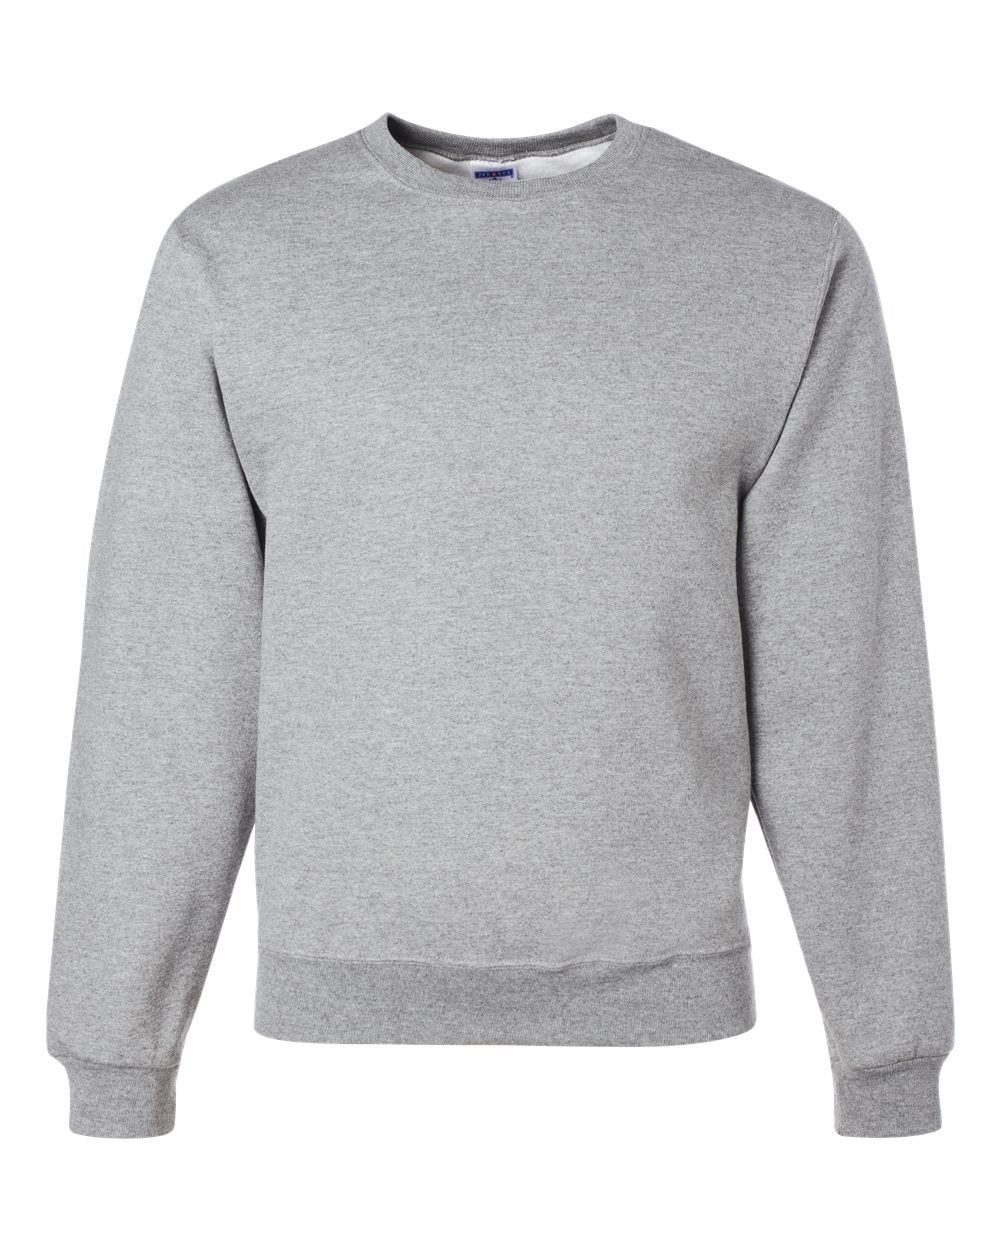 Mix and Match Blue Line Design Sweatshirt